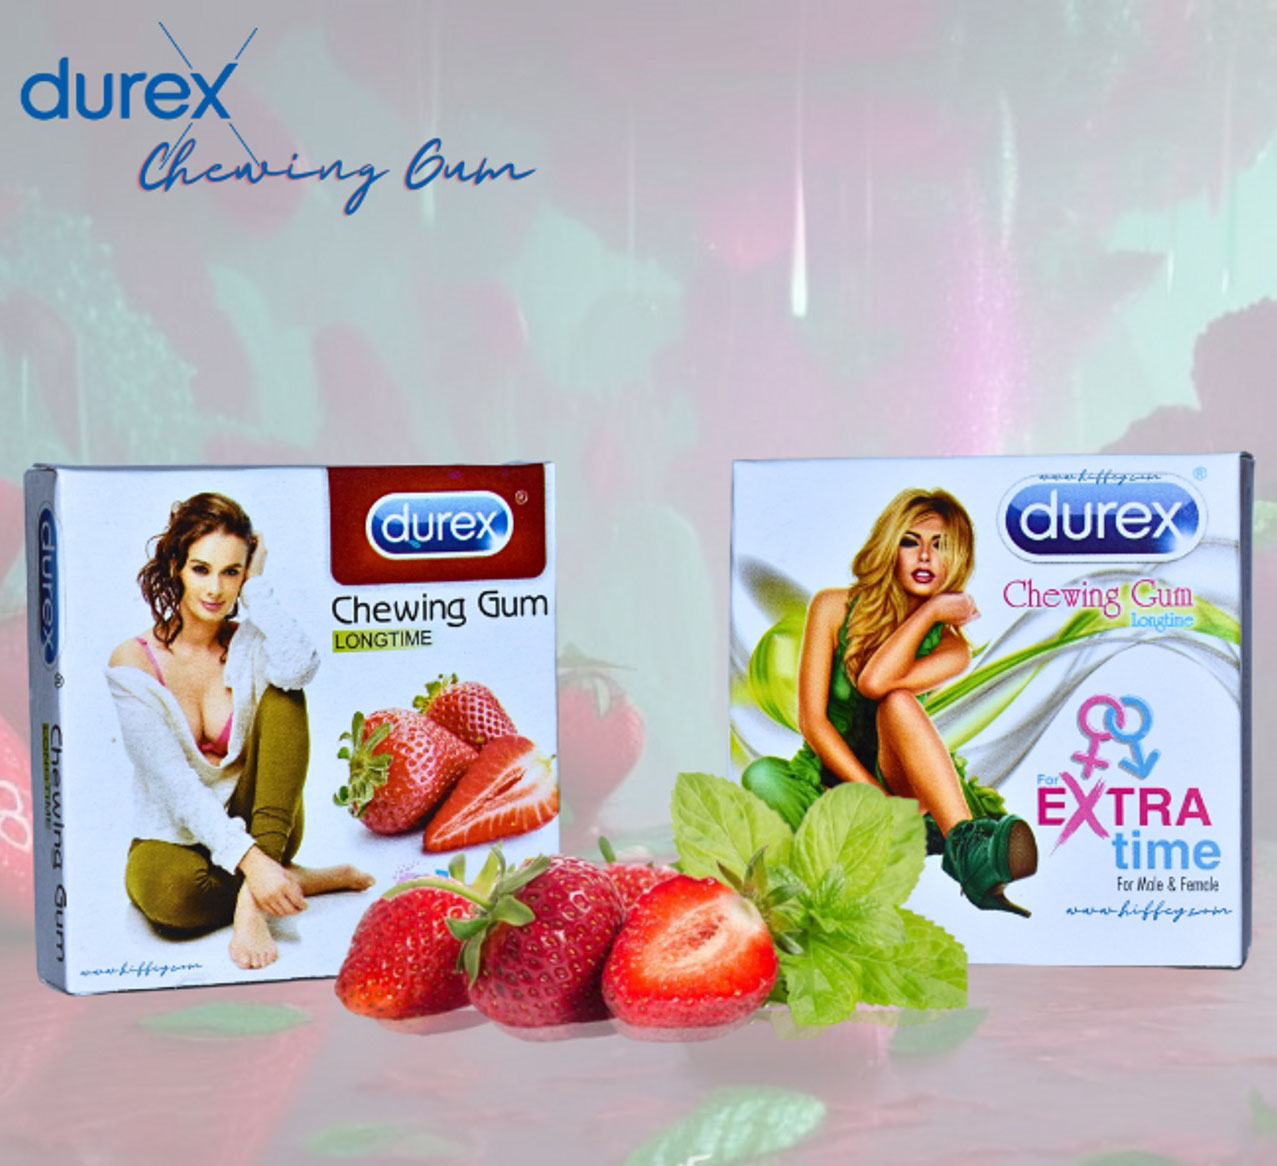 Durex Long Time Chewing Gum in Strawberry & Mint Flavors 03000314766 - Online Shopping in Pakistan,Lahore,Karachi,Islamabad,Bahawalpur,Peshawar,Multan,Rawalpindi - Fareedshopping.com